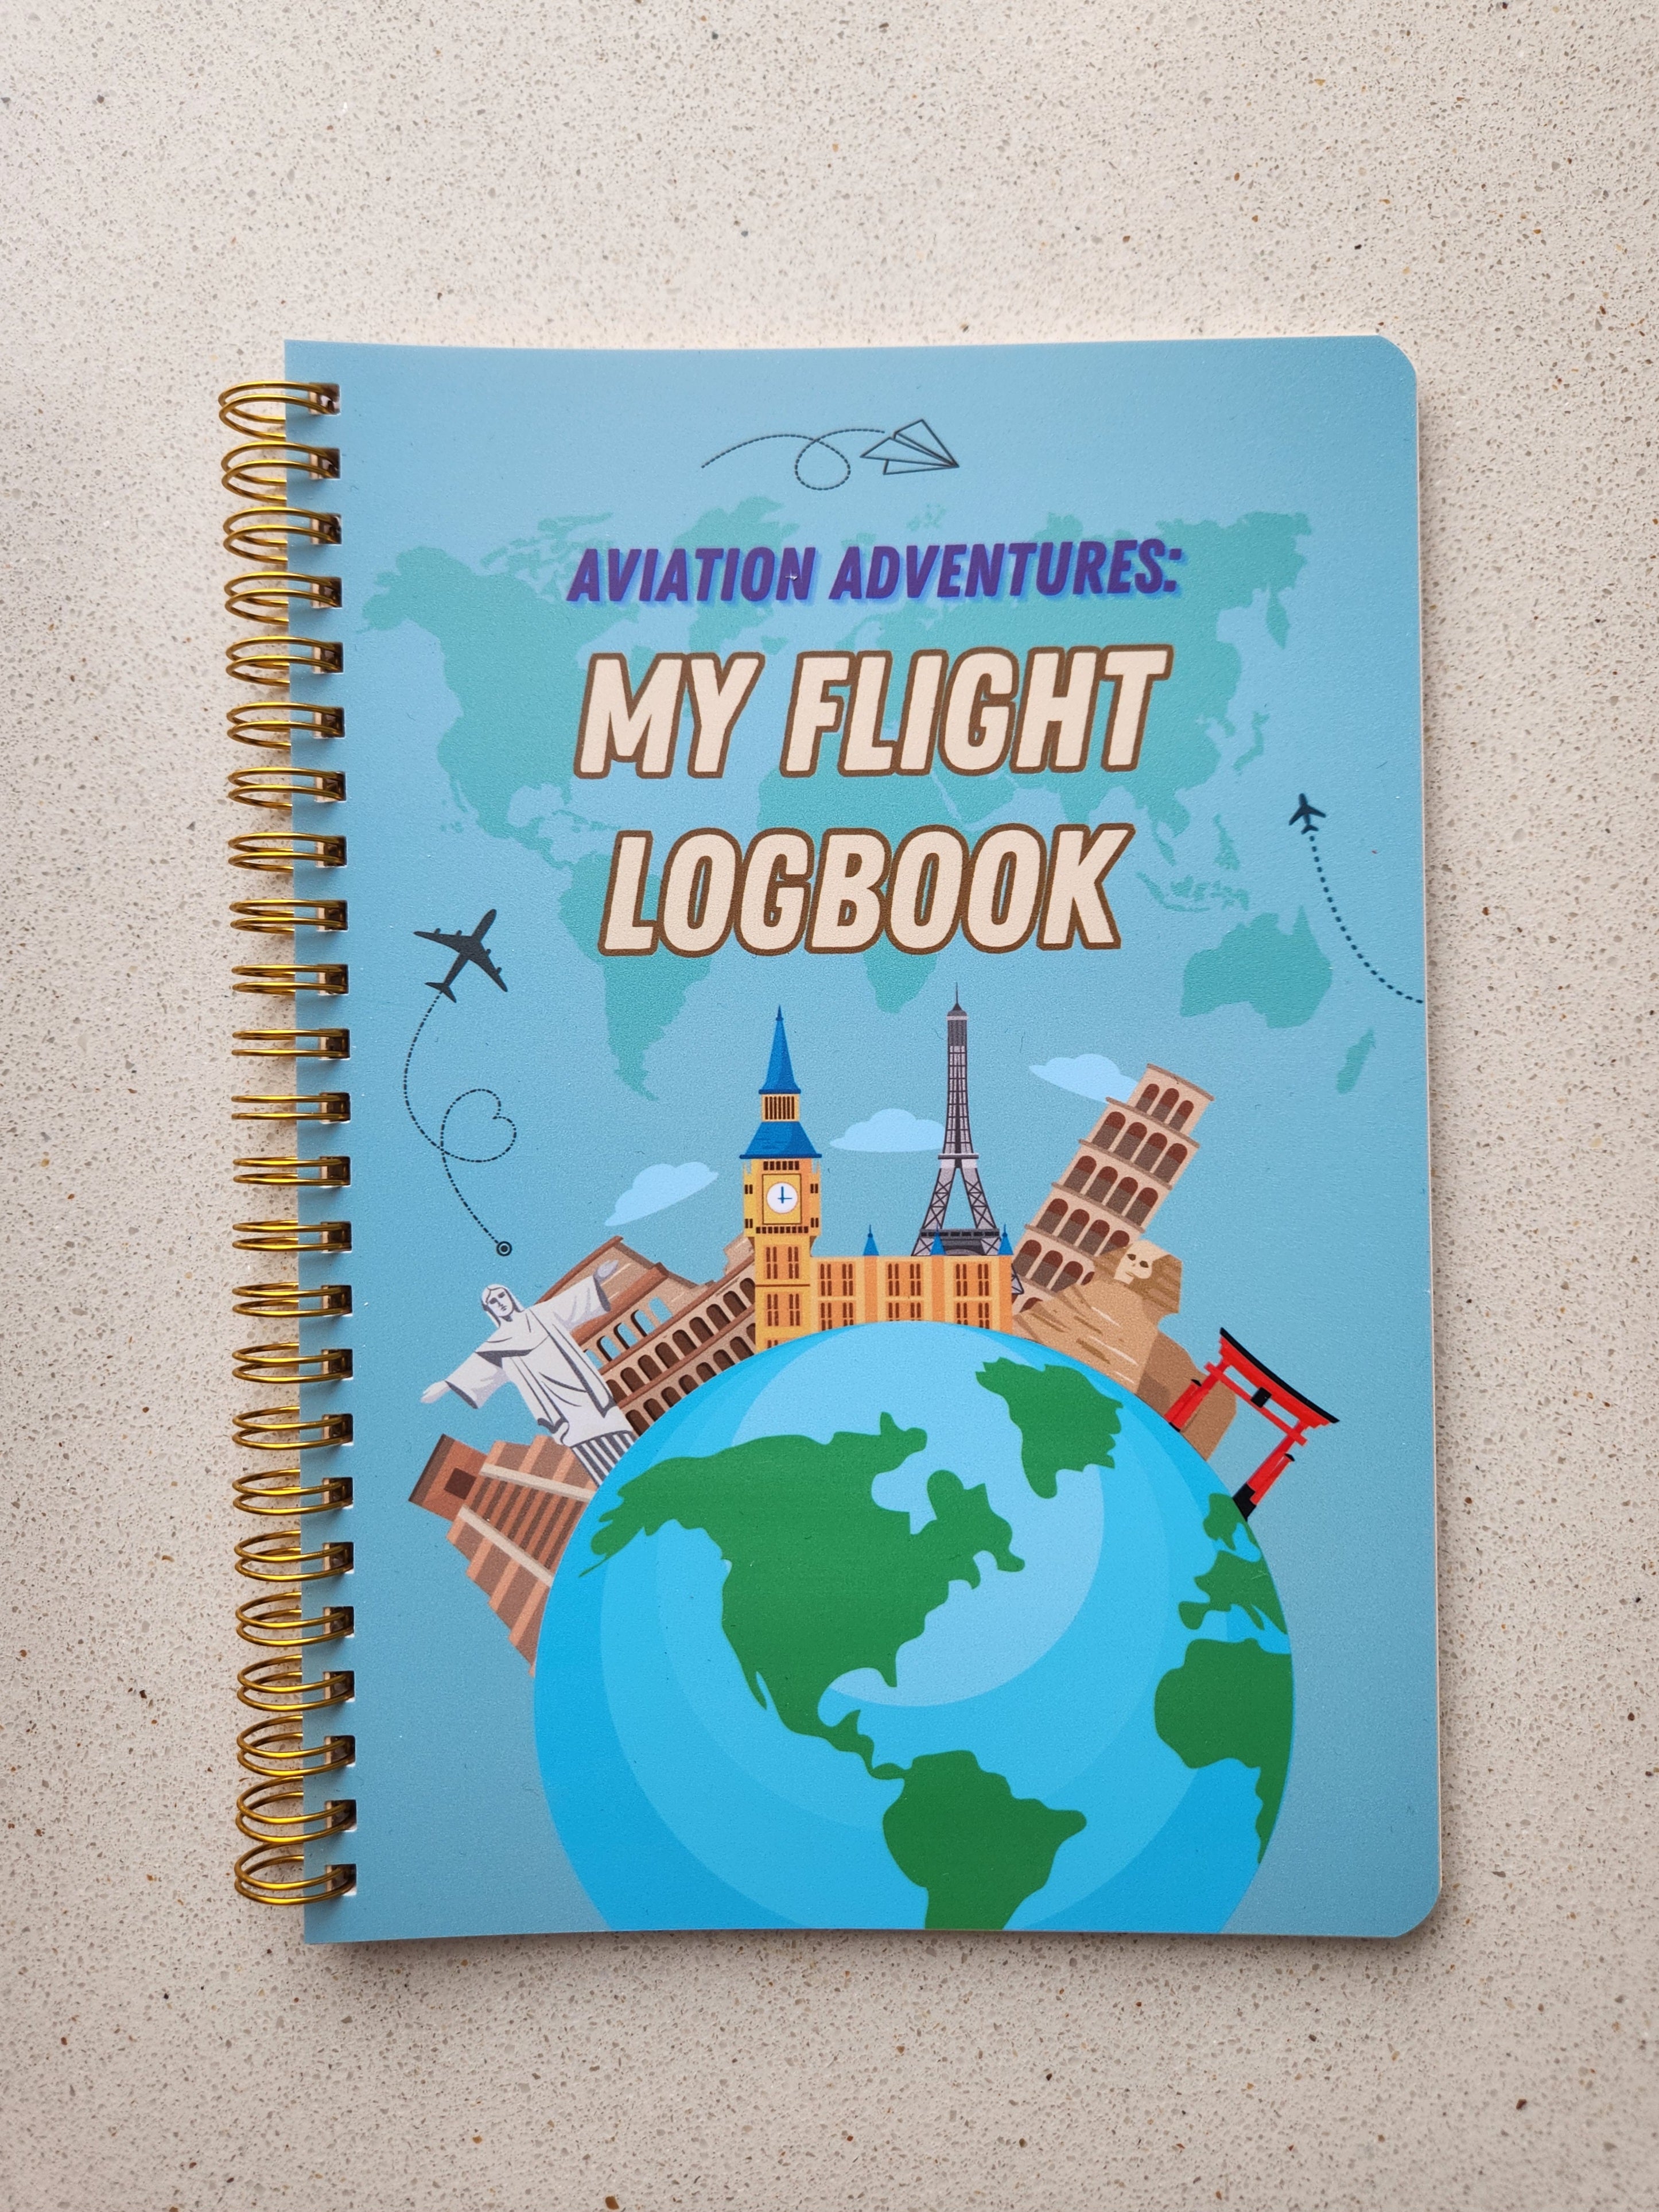 Aviation Adventures: My Flight Logbook